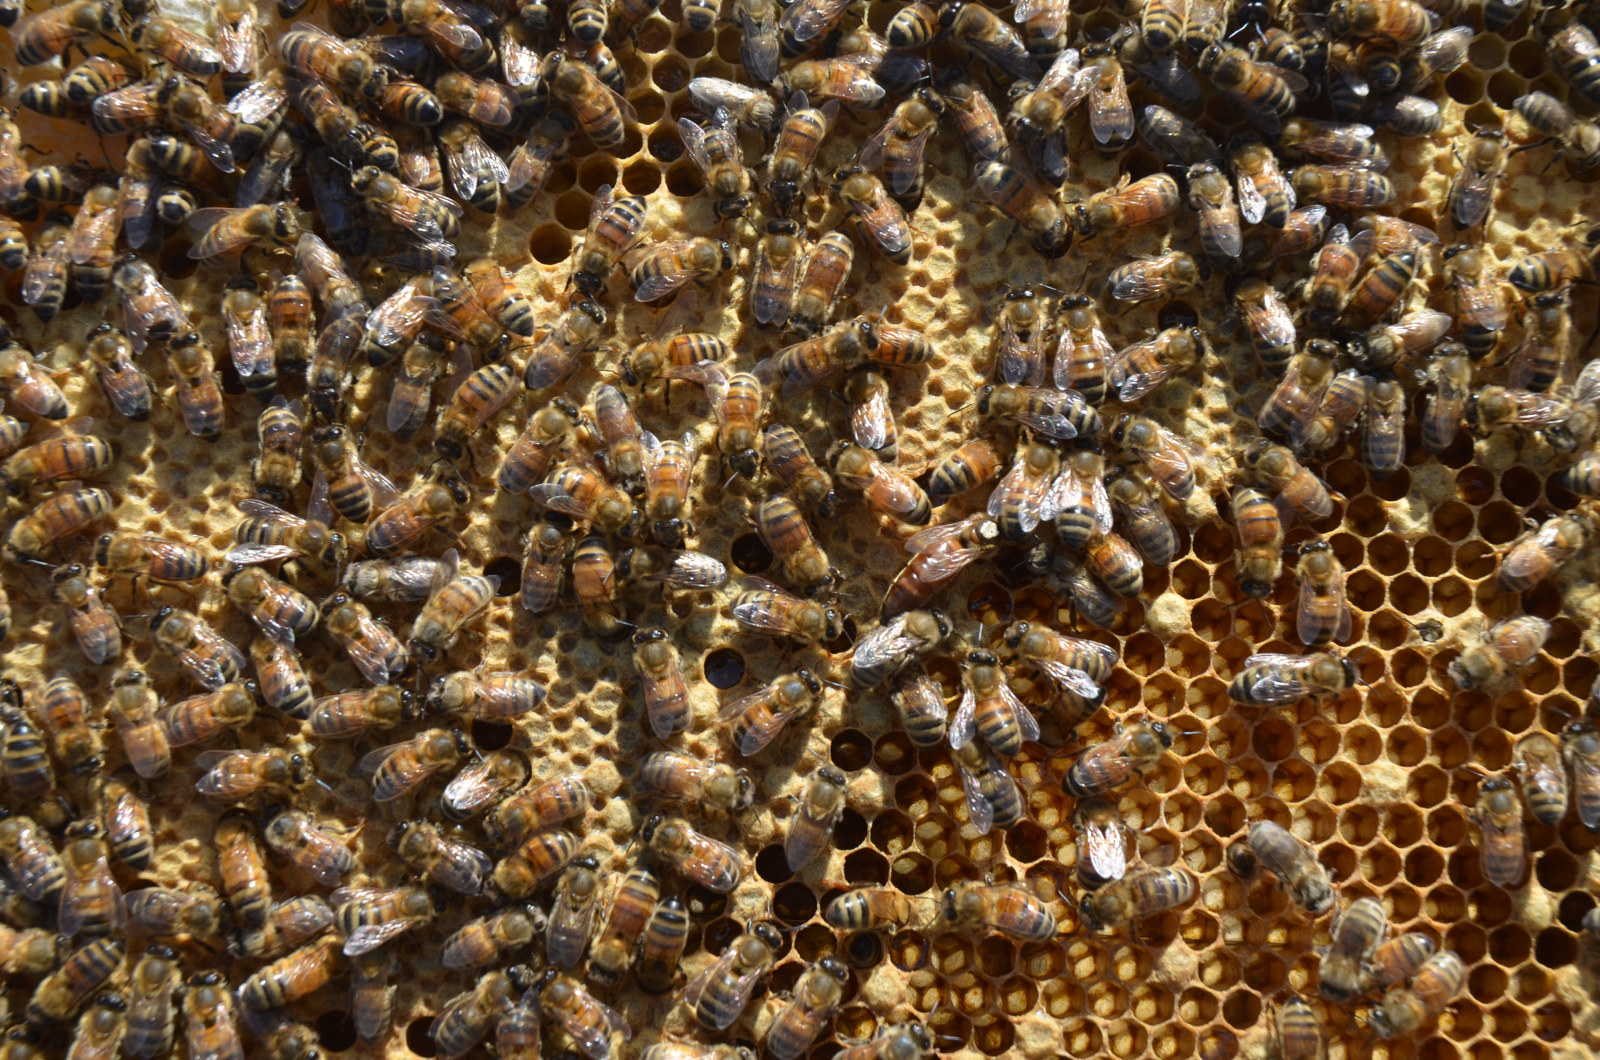 Honeybees in hive